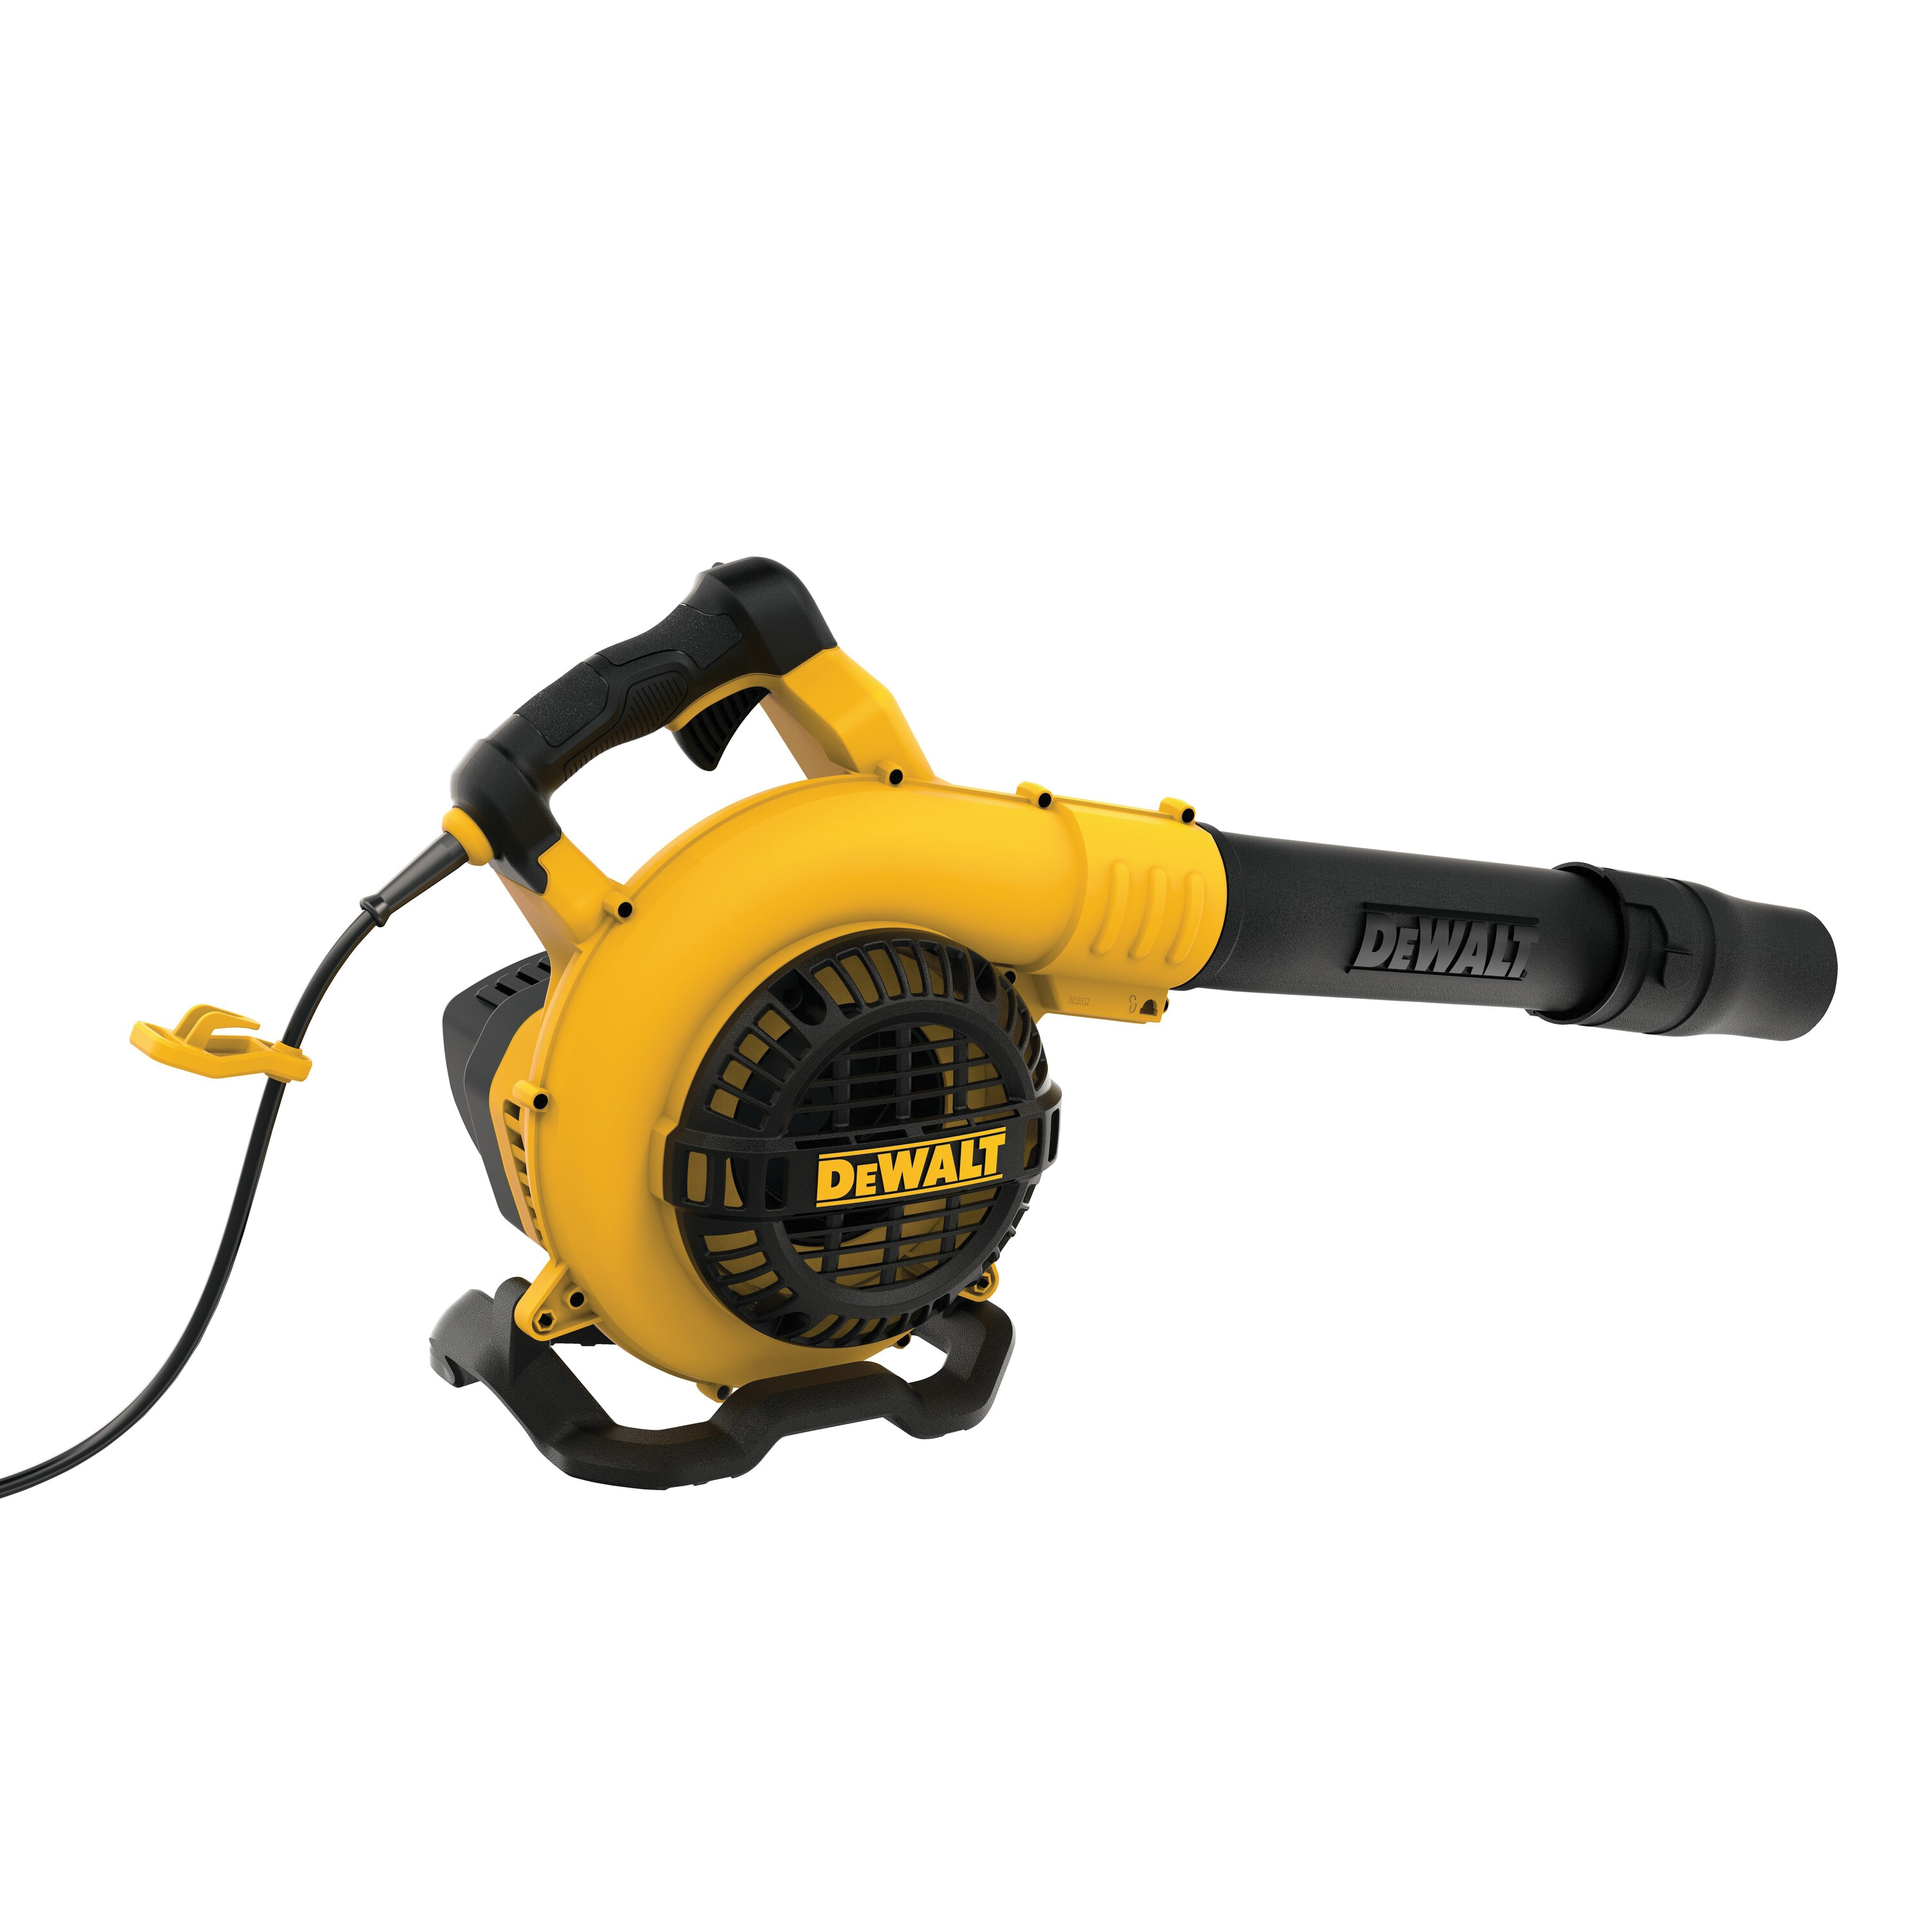 DWBL700 Corded Handheld Blower, 12 A, 409, 288, 82 cfm Air, Black/Yellow